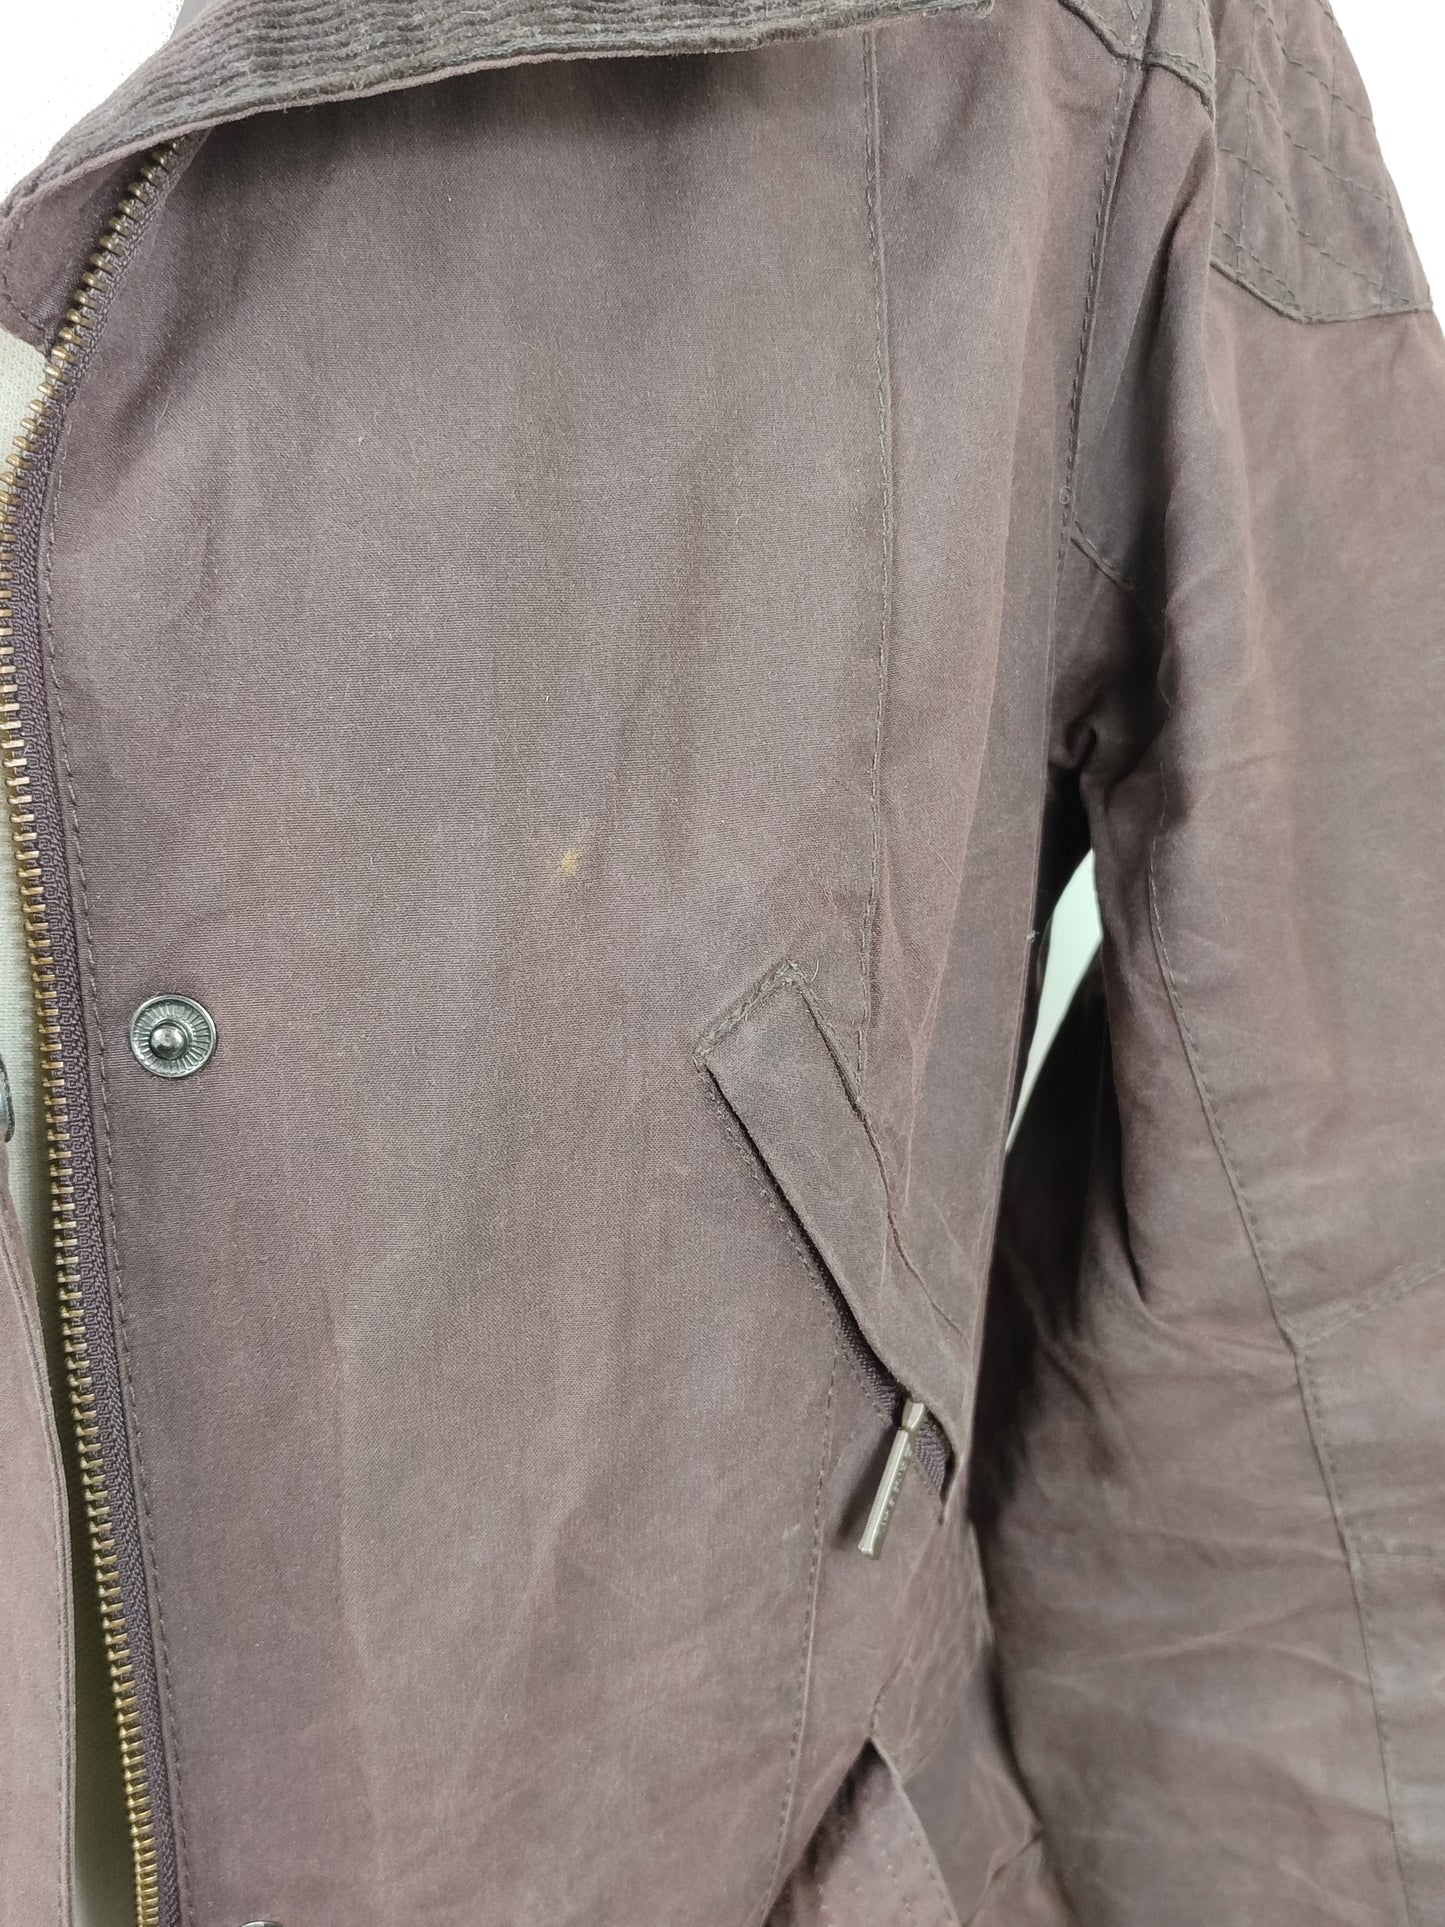 Giacca Barbour da donna con cintura marrone tg.44 Uk14-Wax Brown Lady Rebel Jacket Uk14